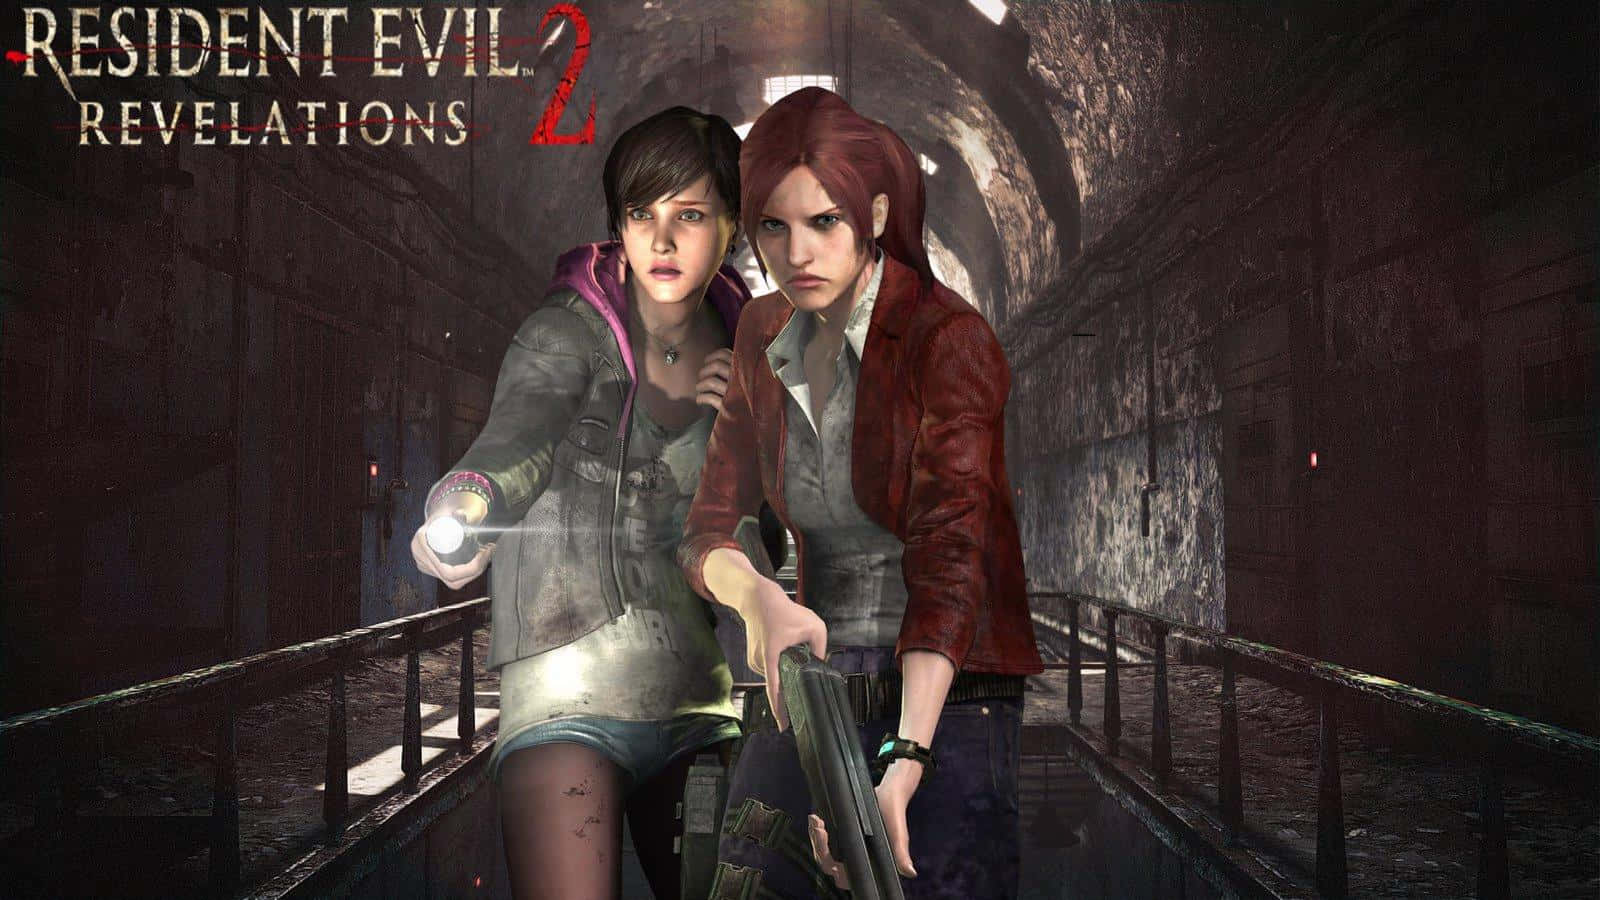 Claireredfield Und Moira Burton Kämpfen Gegen Mutierte Kreaturen In Resident Evil Revelations 2. Wallpaper